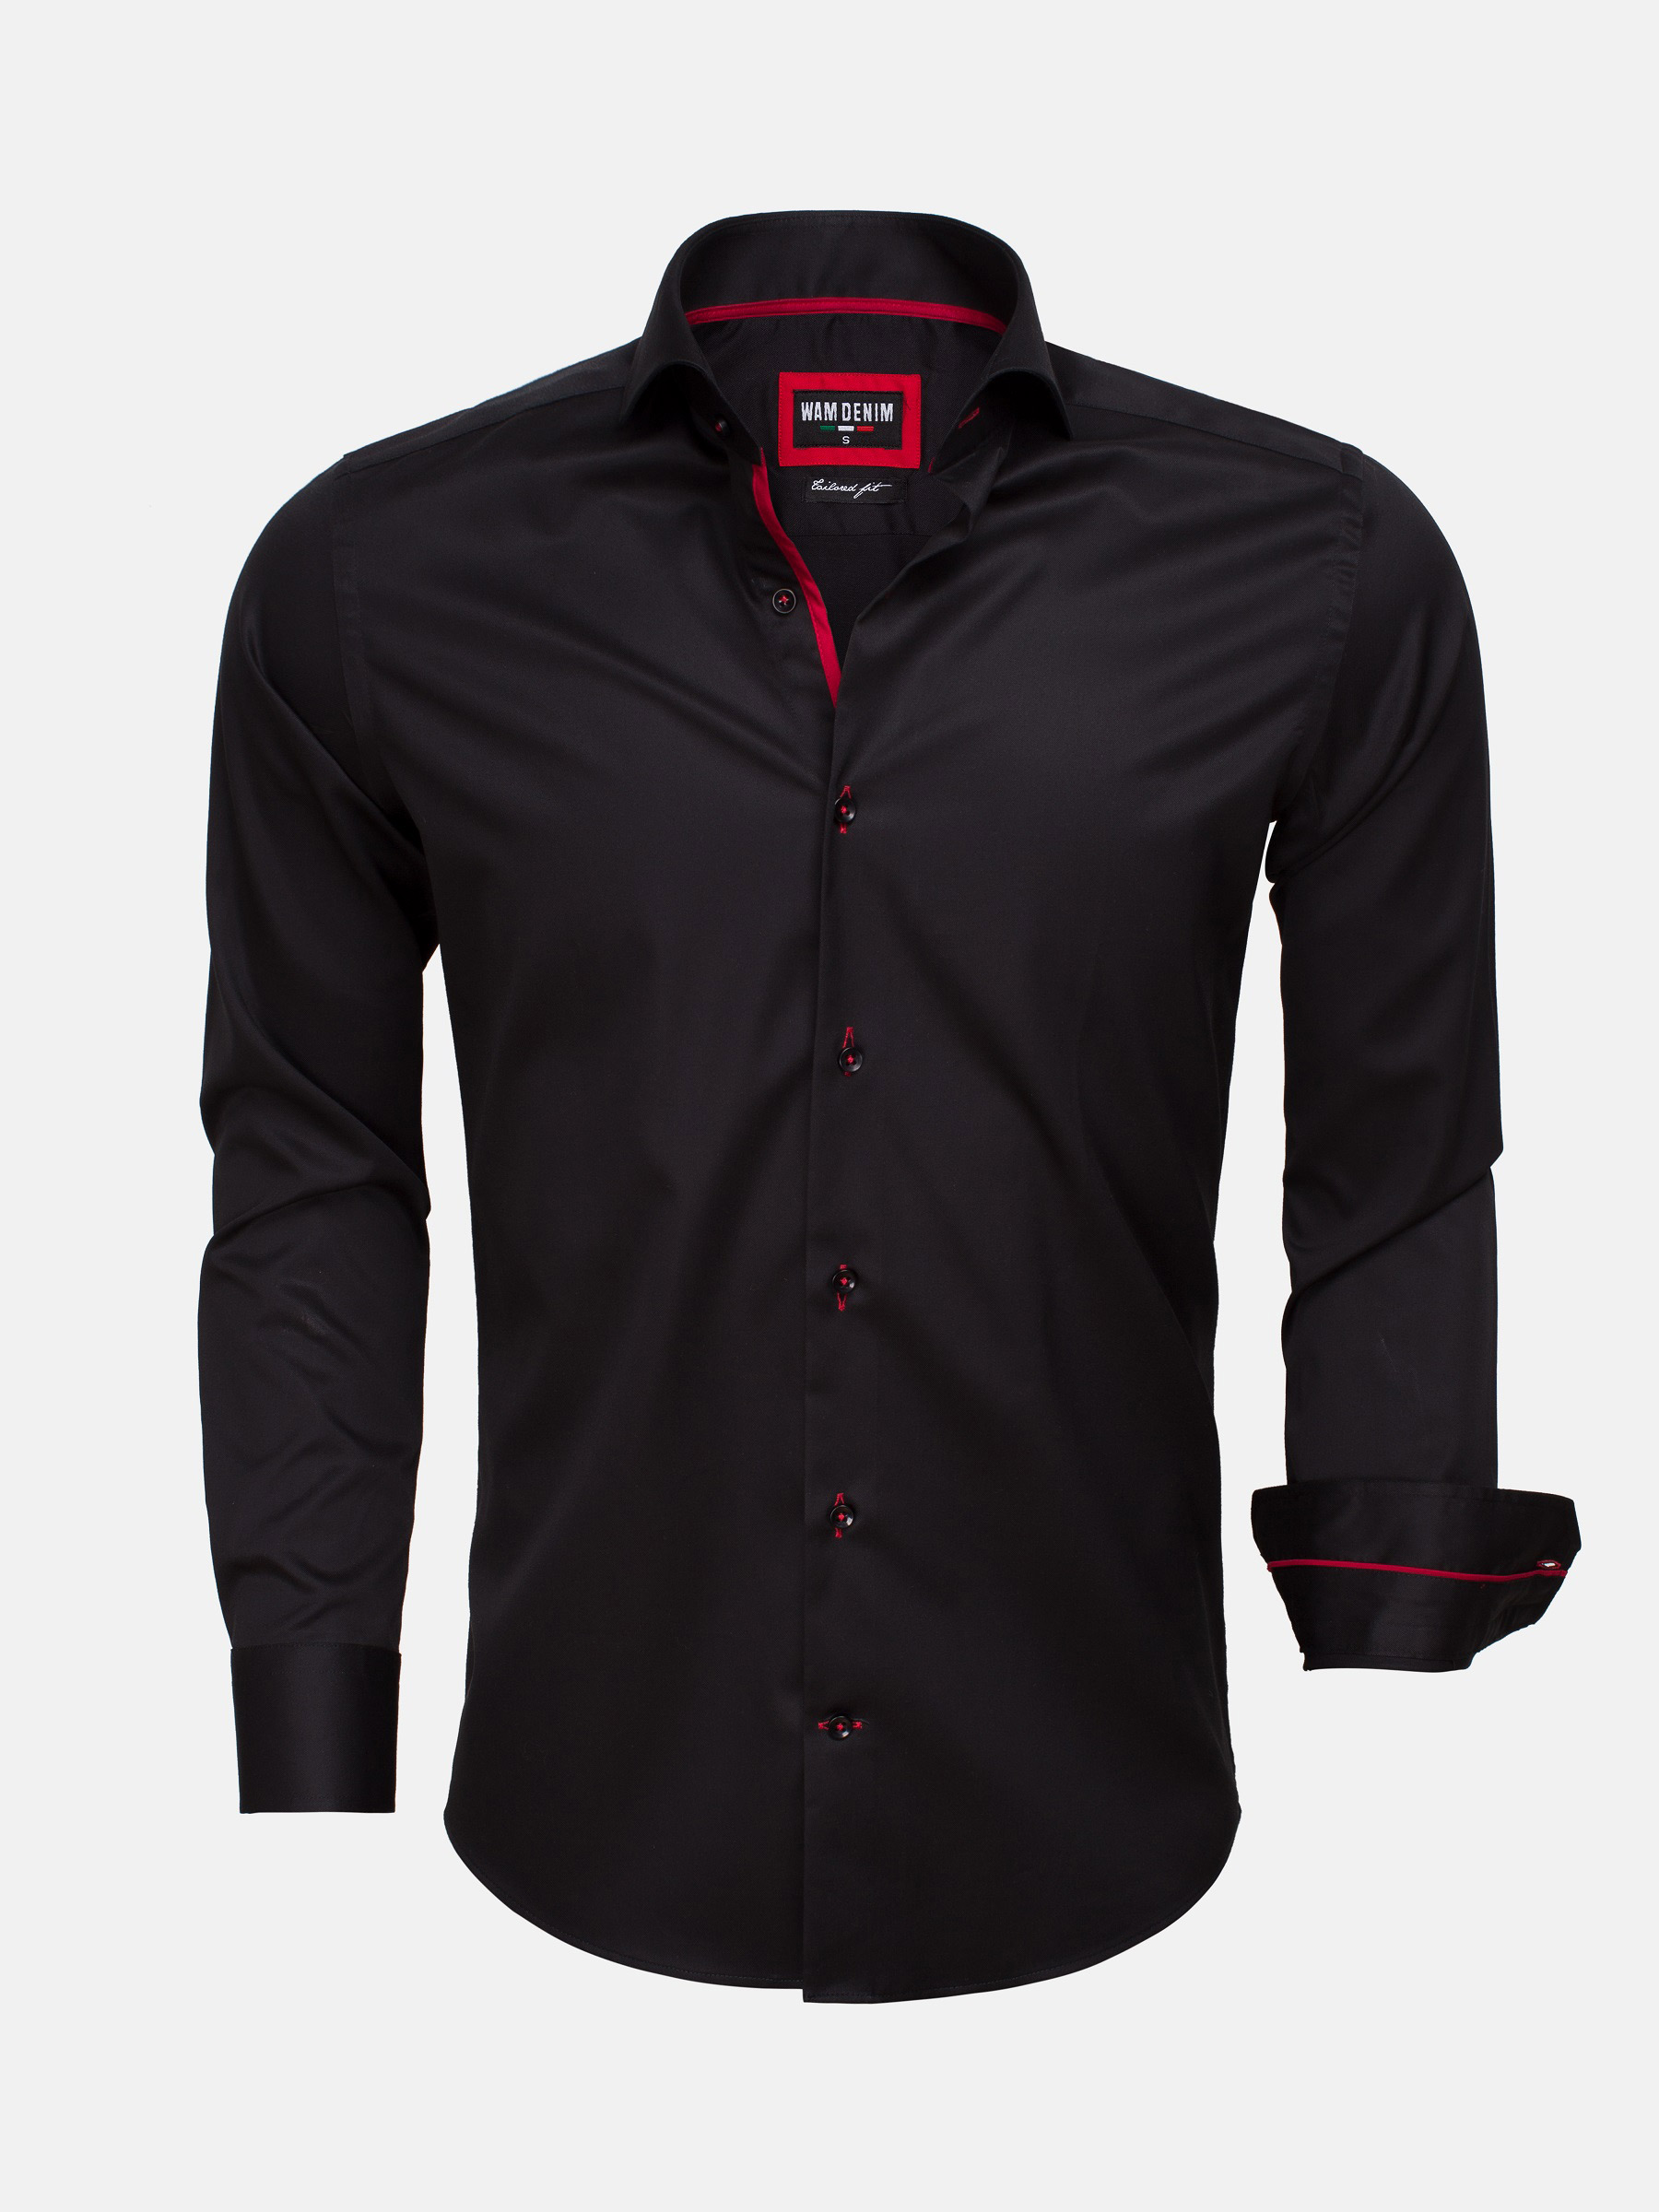 WAM Denim Overhemd 75525 Jaen Black-